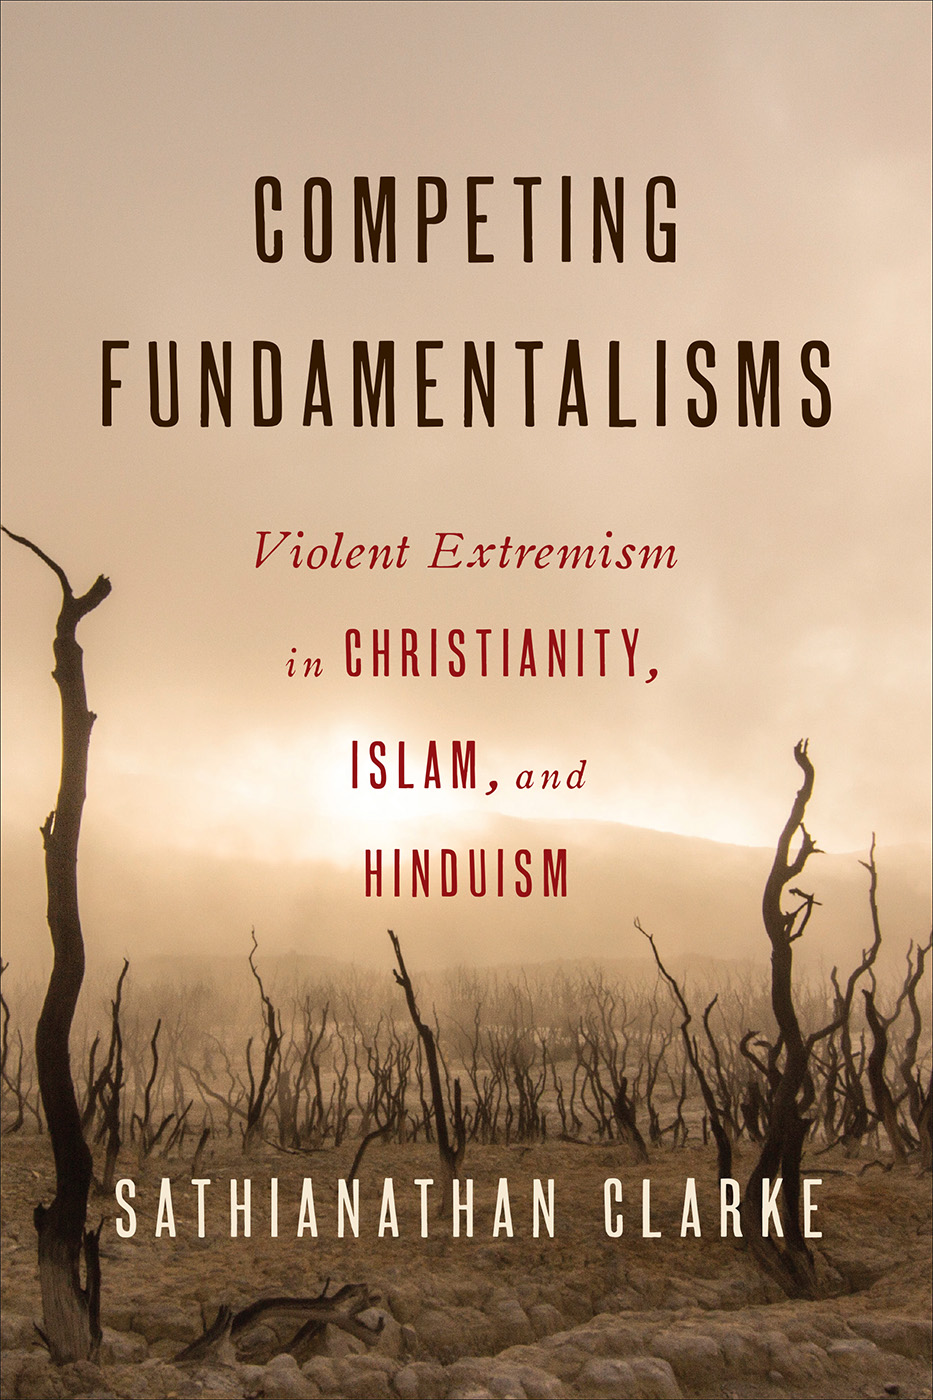 Competing Fundamentalisms